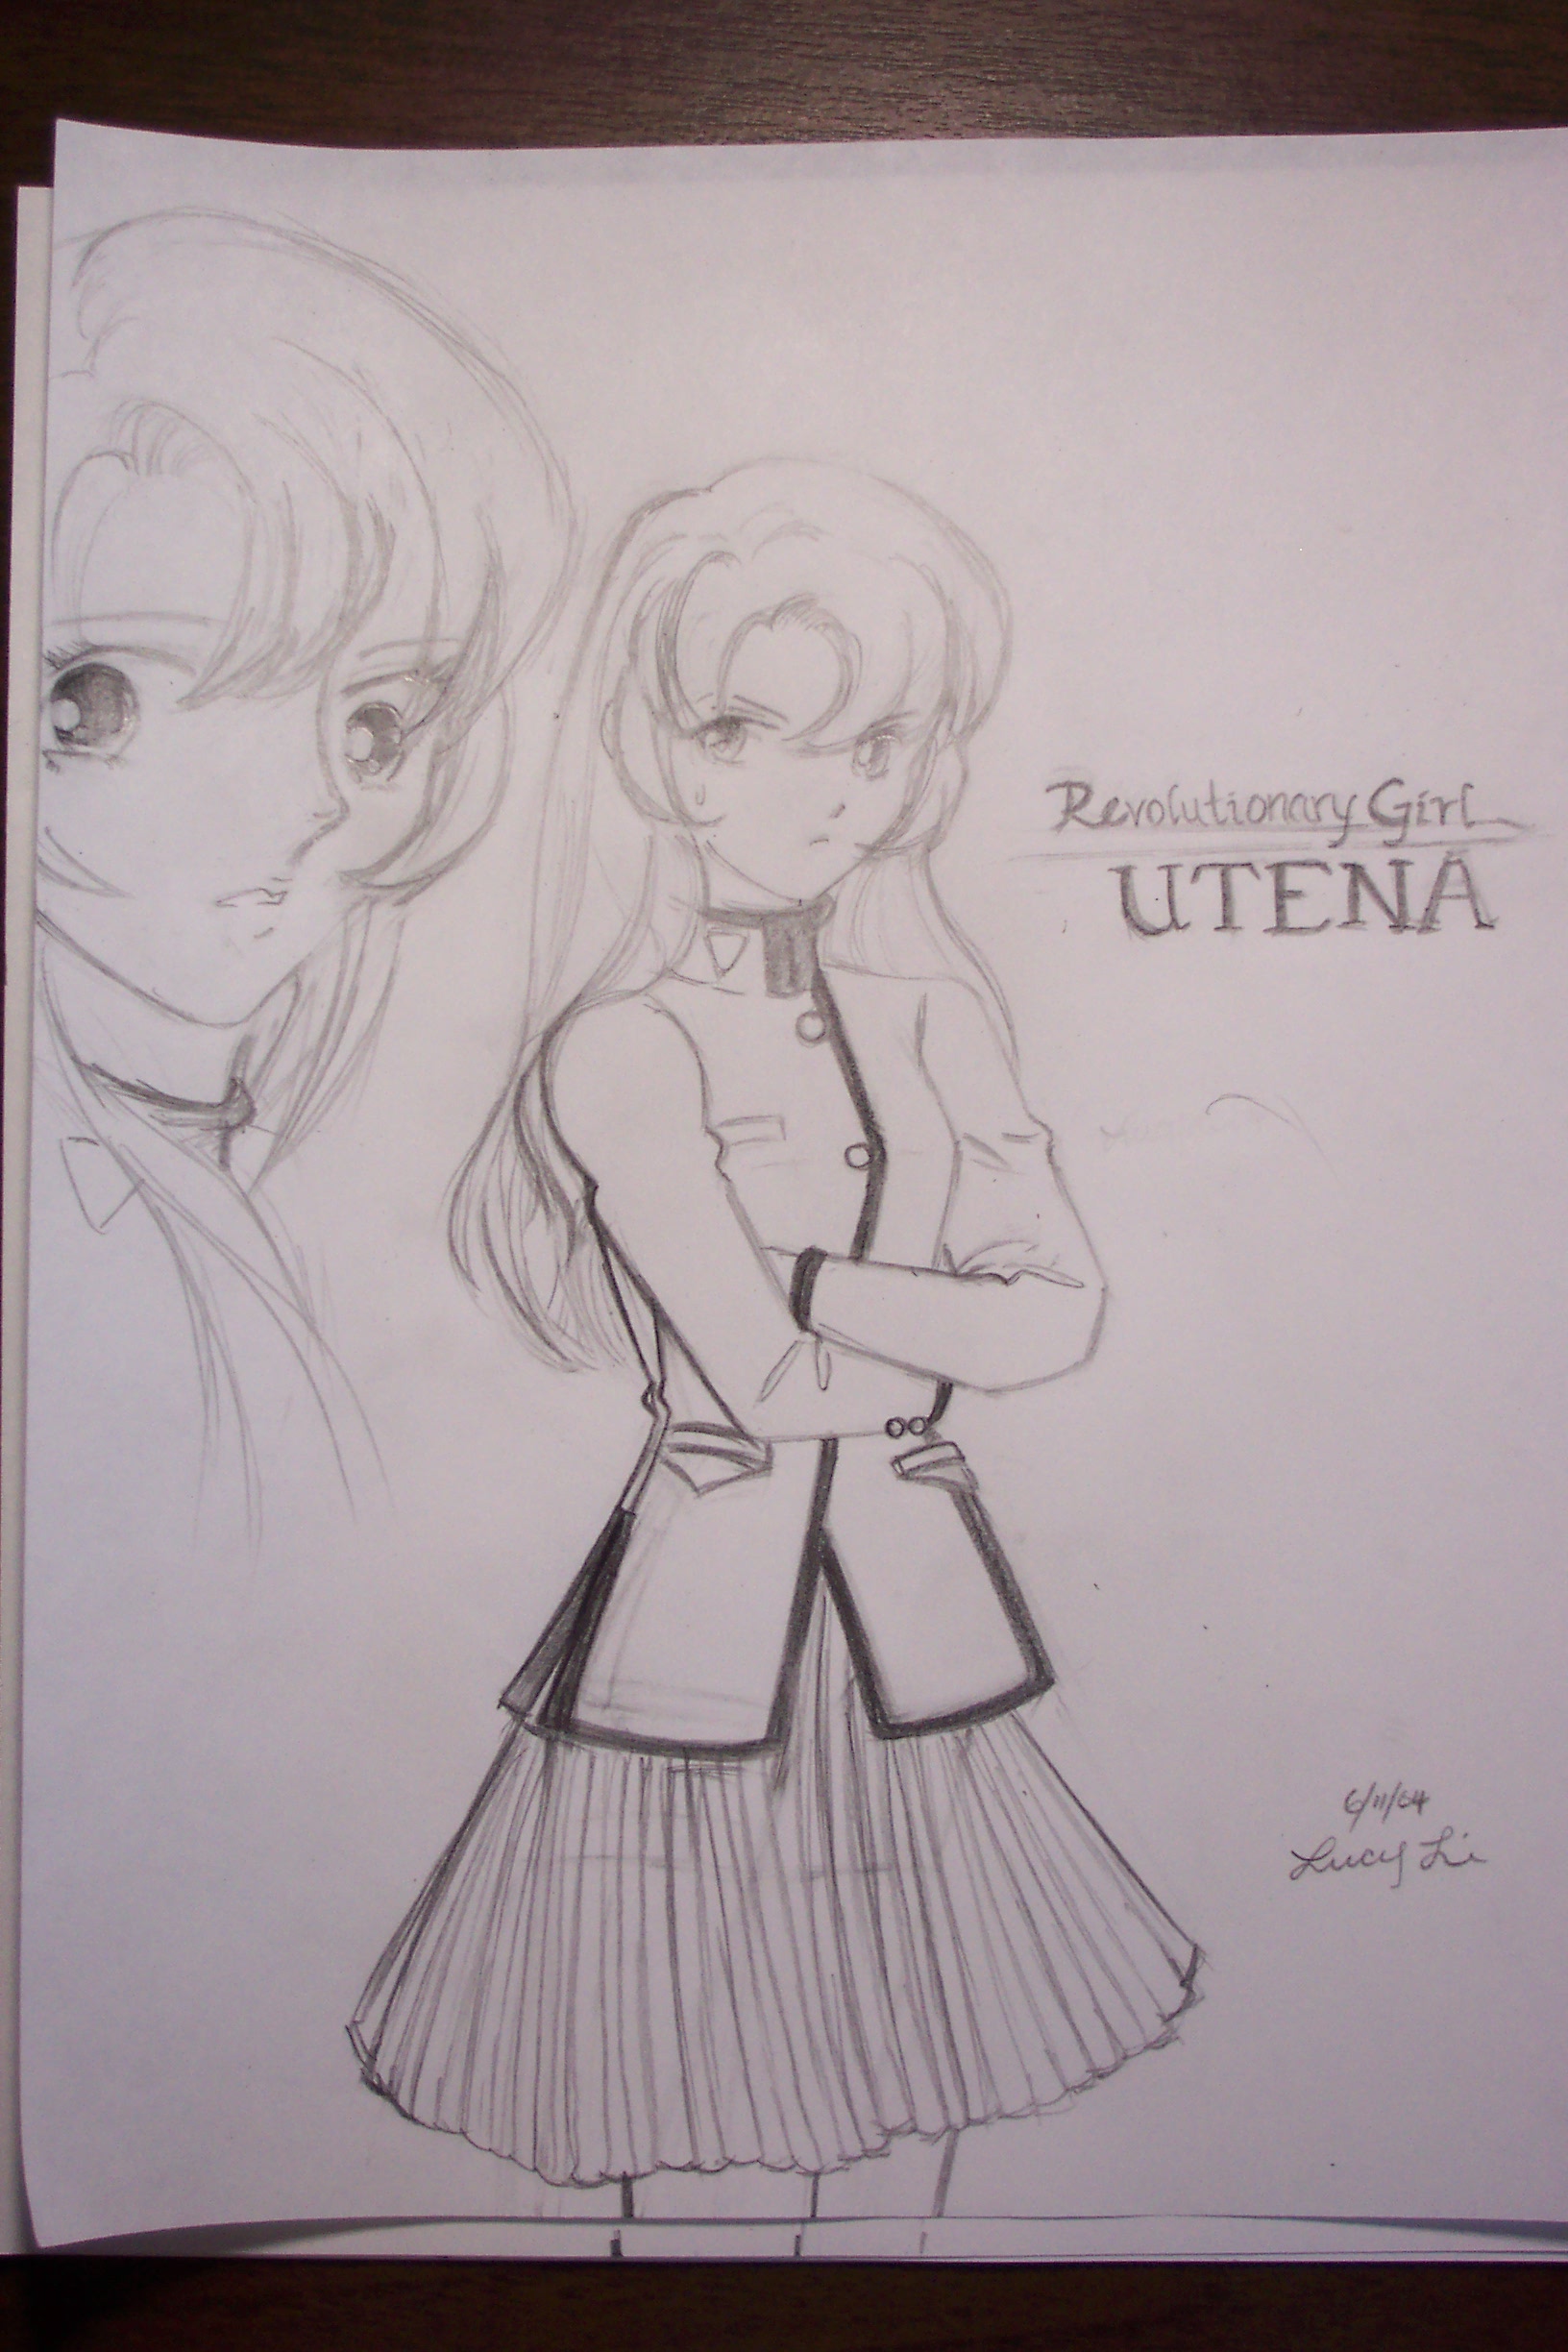 Revolution Girl: Utena